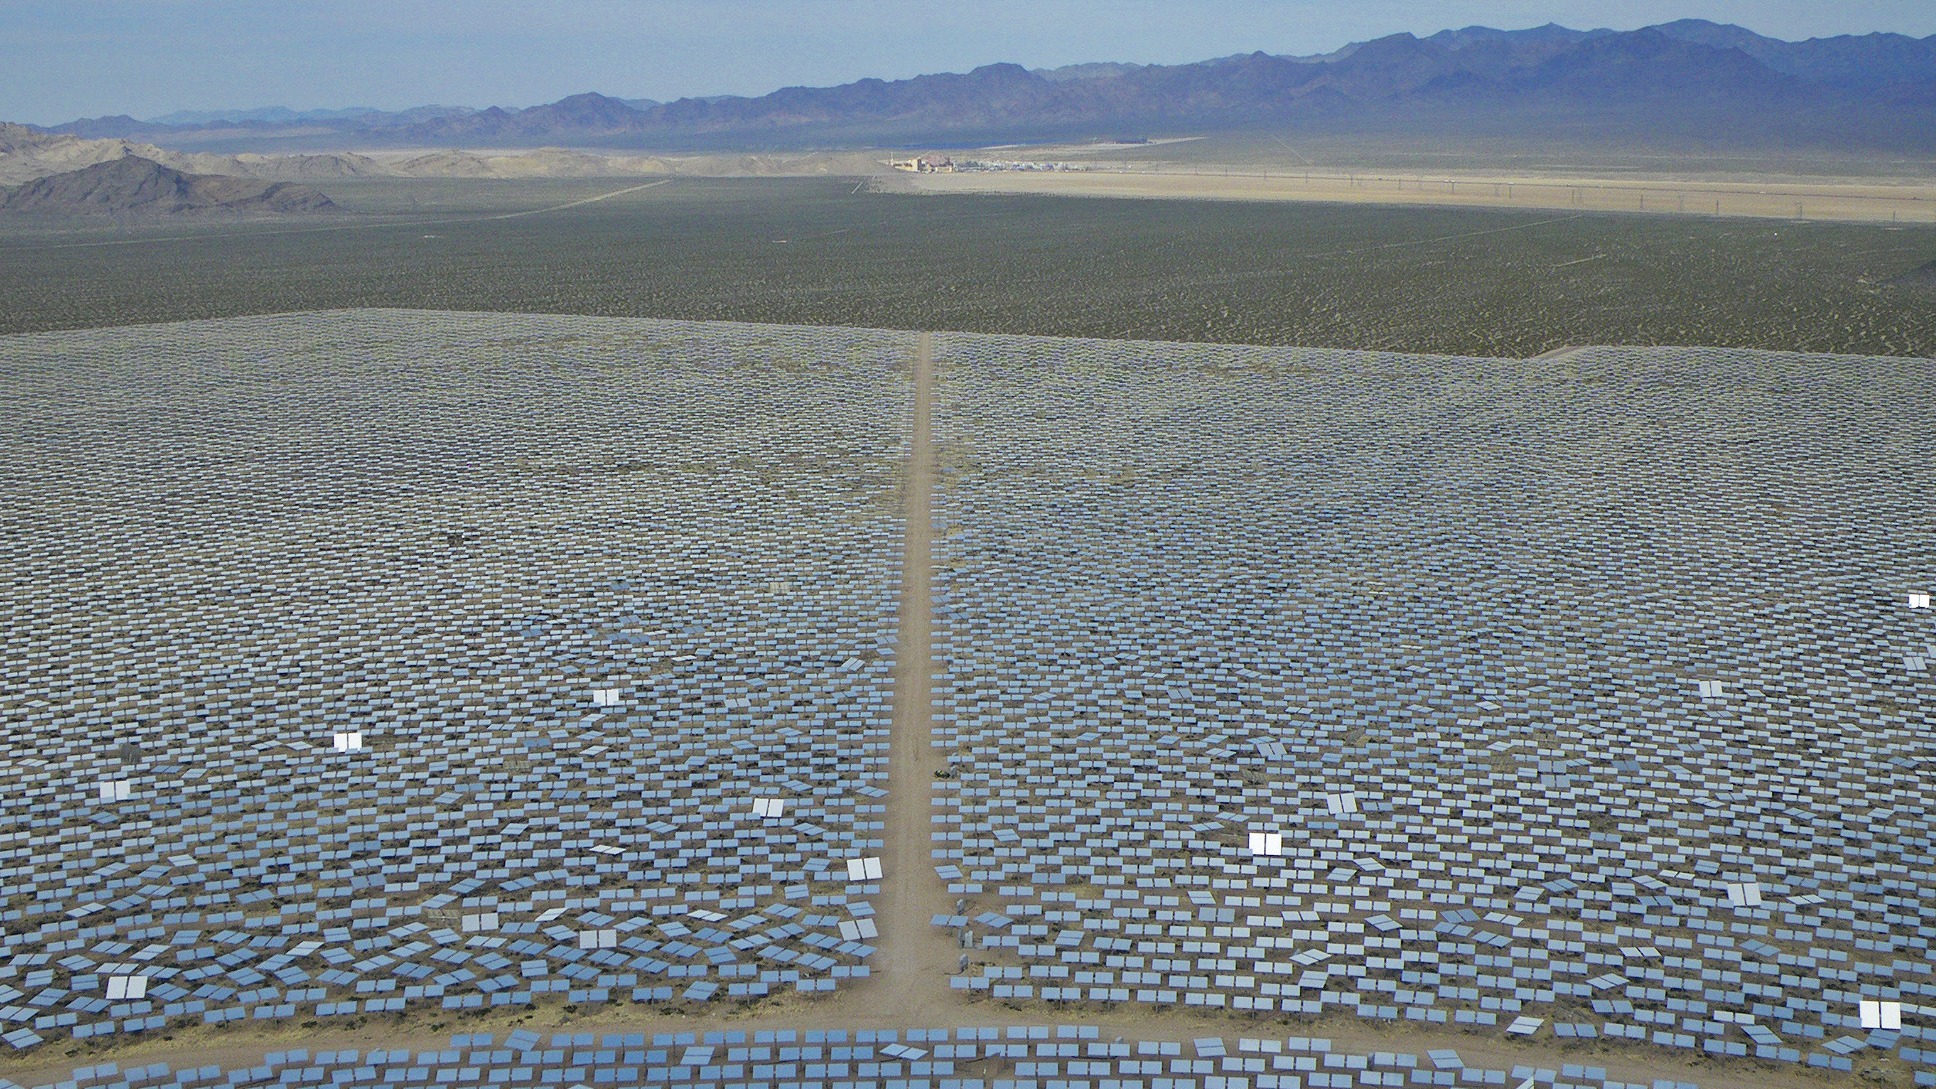 Ivanpah solar facility in Mojave Desert